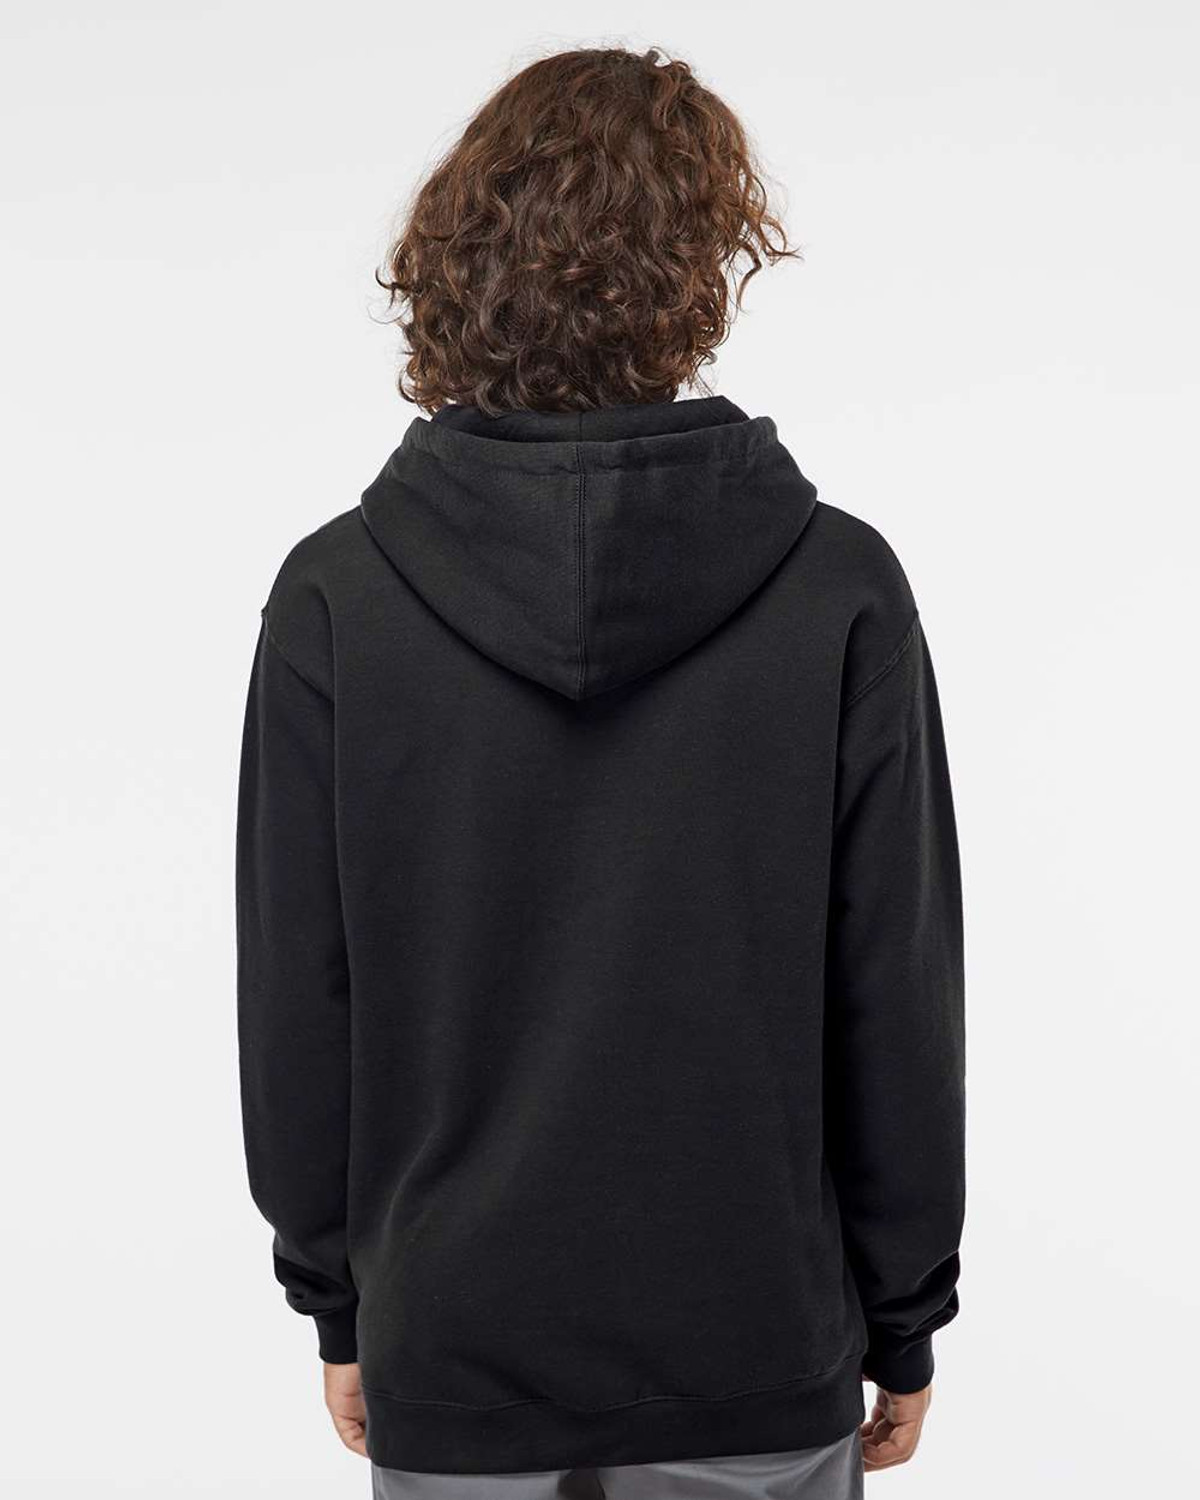 BC Clothing zip up hoodie sweatshirt fleece lined warm size large women's